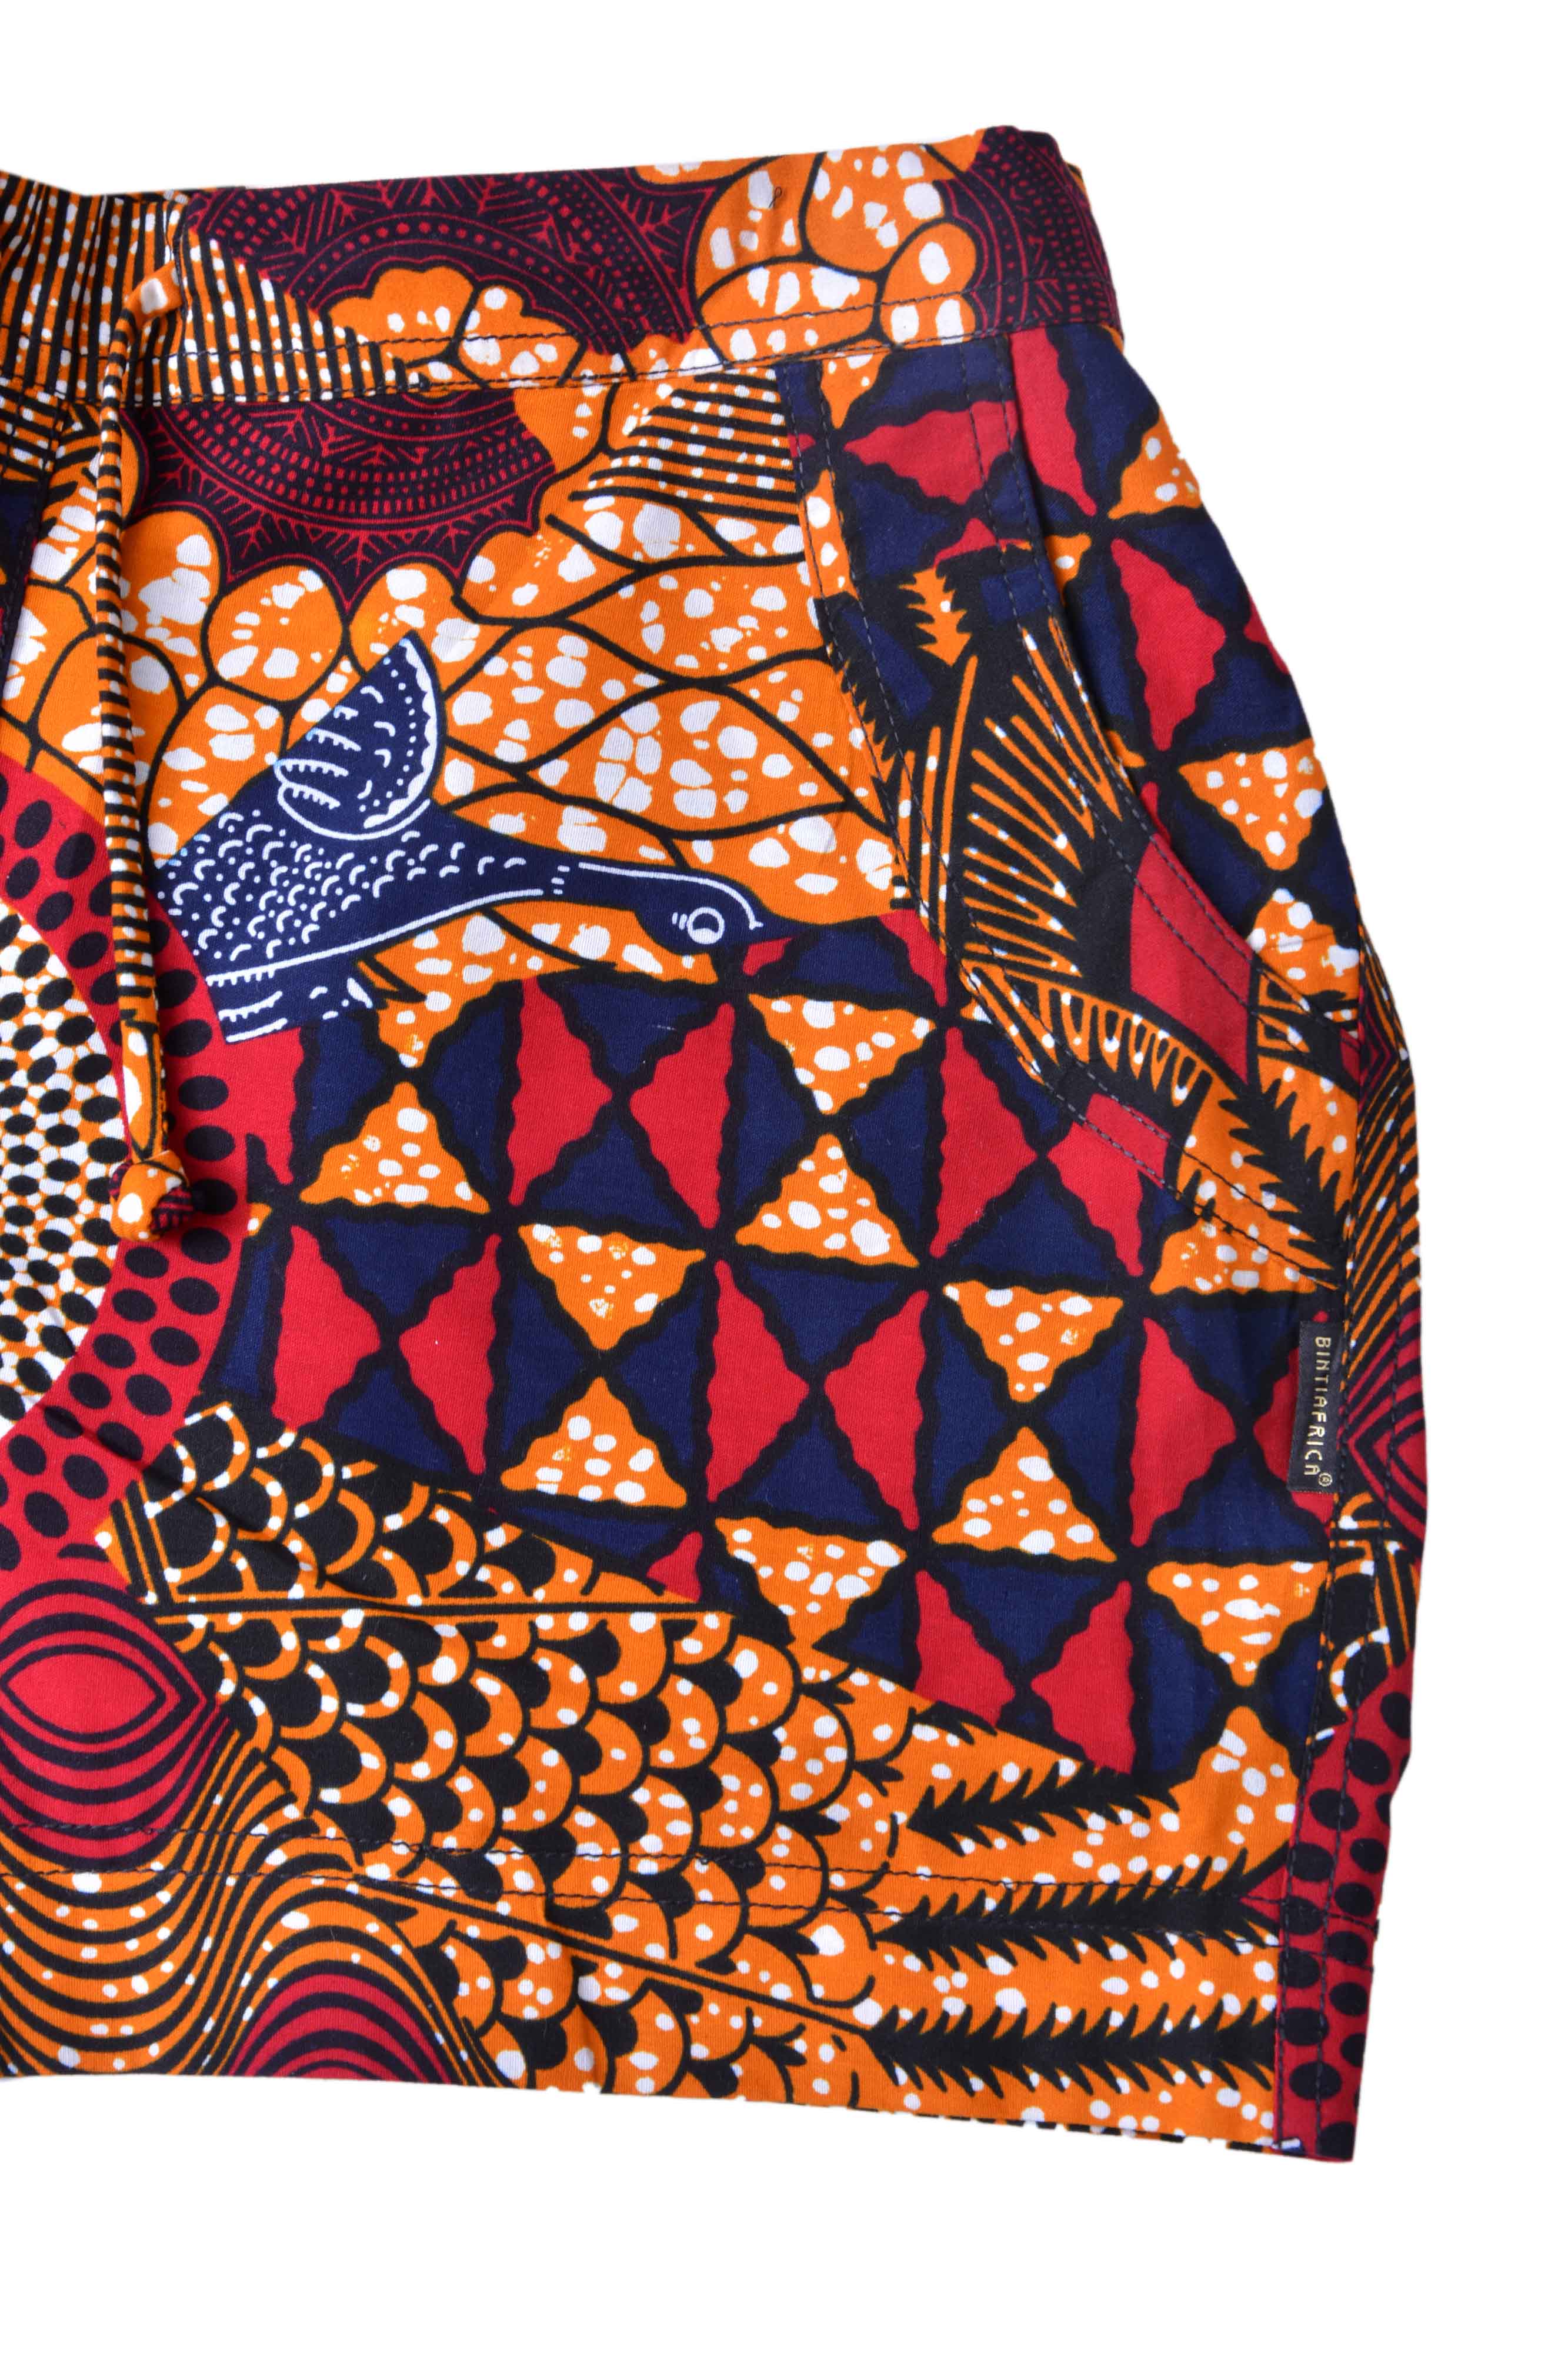 Gelly Ankara Shorts, Shorts, African Print Shorts, African Print, Africa  Short, Knickers, Ankdara Knickers, Afican Knickers -  Norway